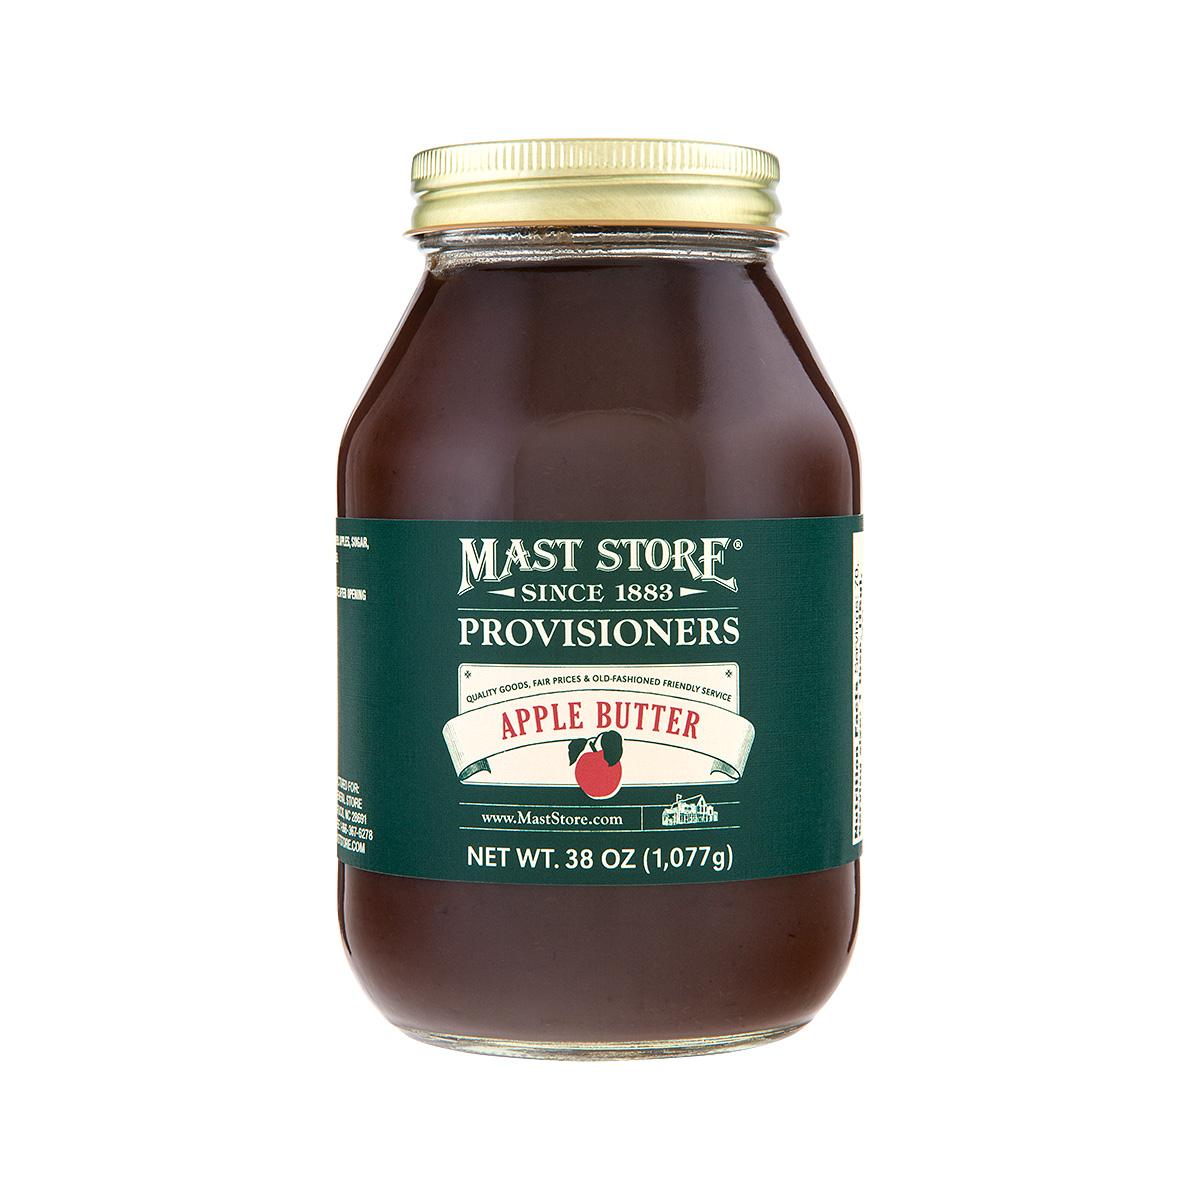  Mast Store Provisioners Apple Butter - Quart